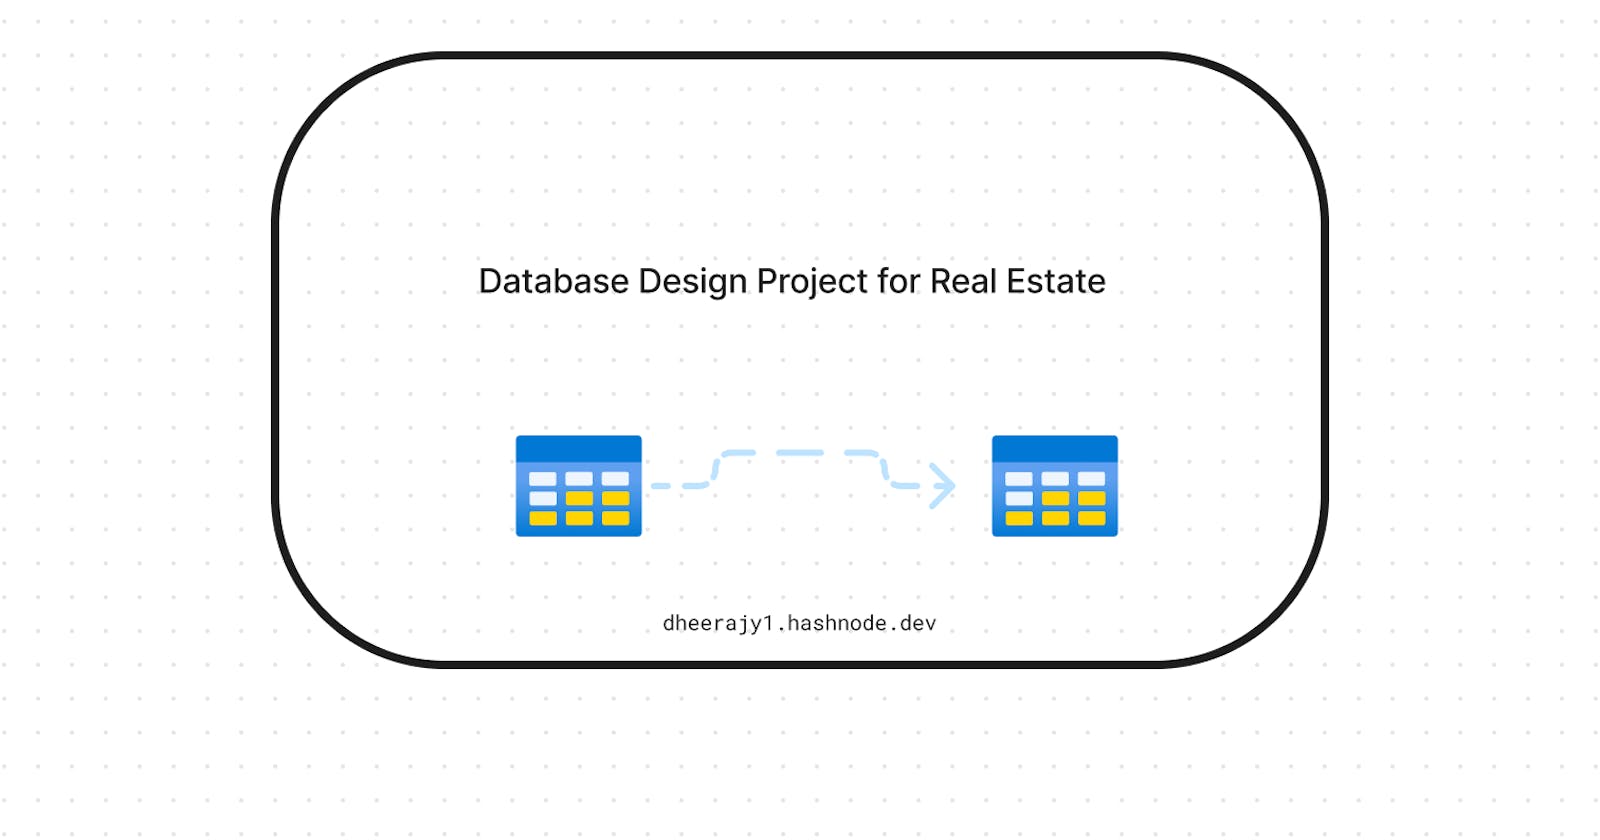 Database Design Project for Real Estate